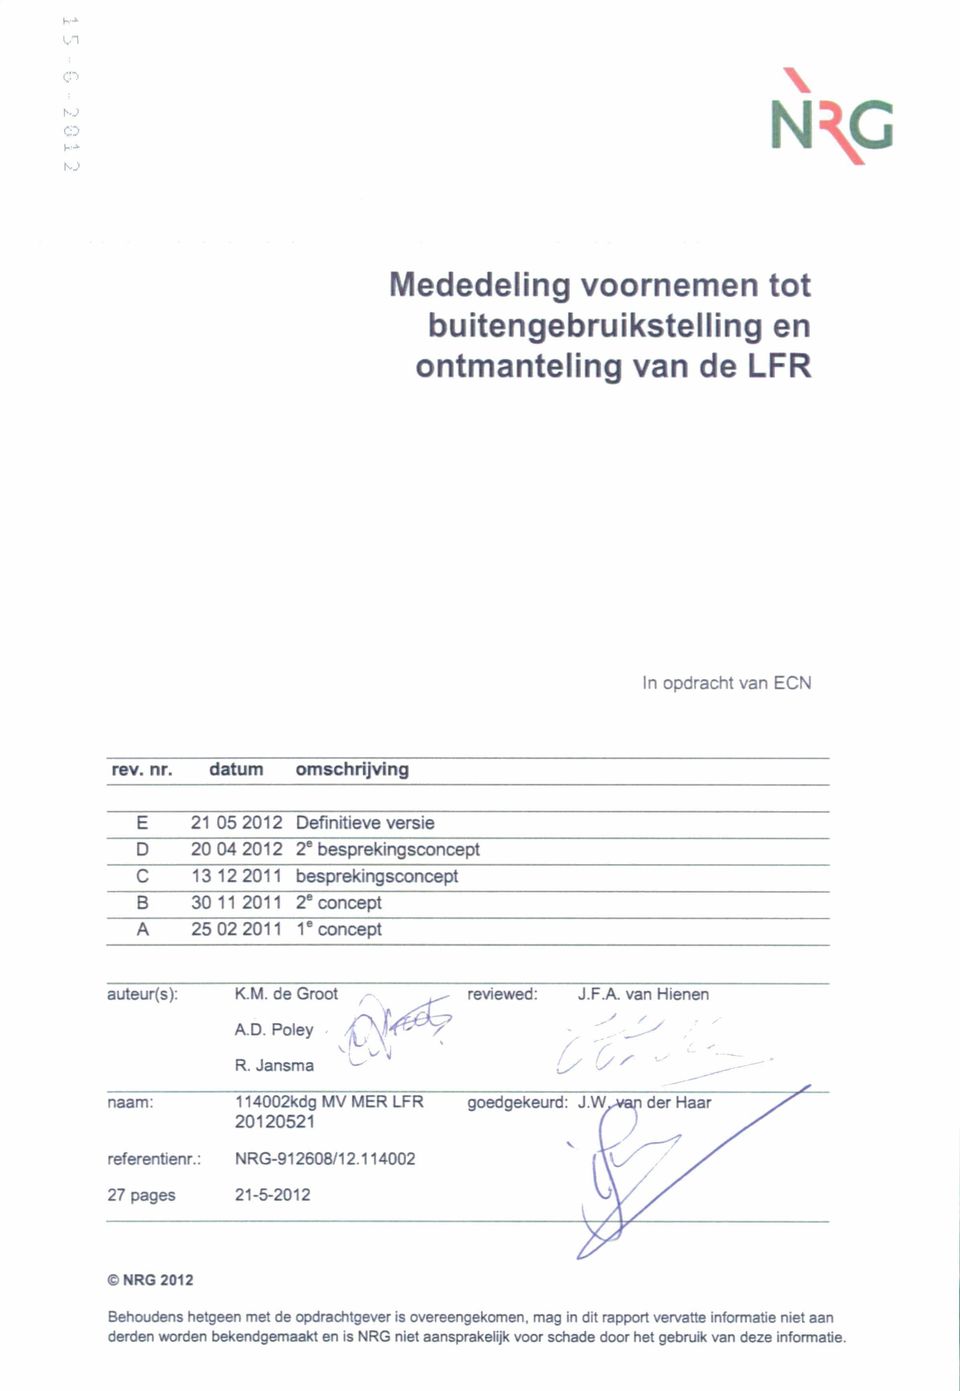 M. de Groot reviewed: J.F.A. van Hienen A.D. Poley /\iff^*^ R. Jansma ^ naam: 114002kdg MV MER LFR goedgekeurd: J.W^ an der Haar 20120521 referentienr.: NRG-912608/12.